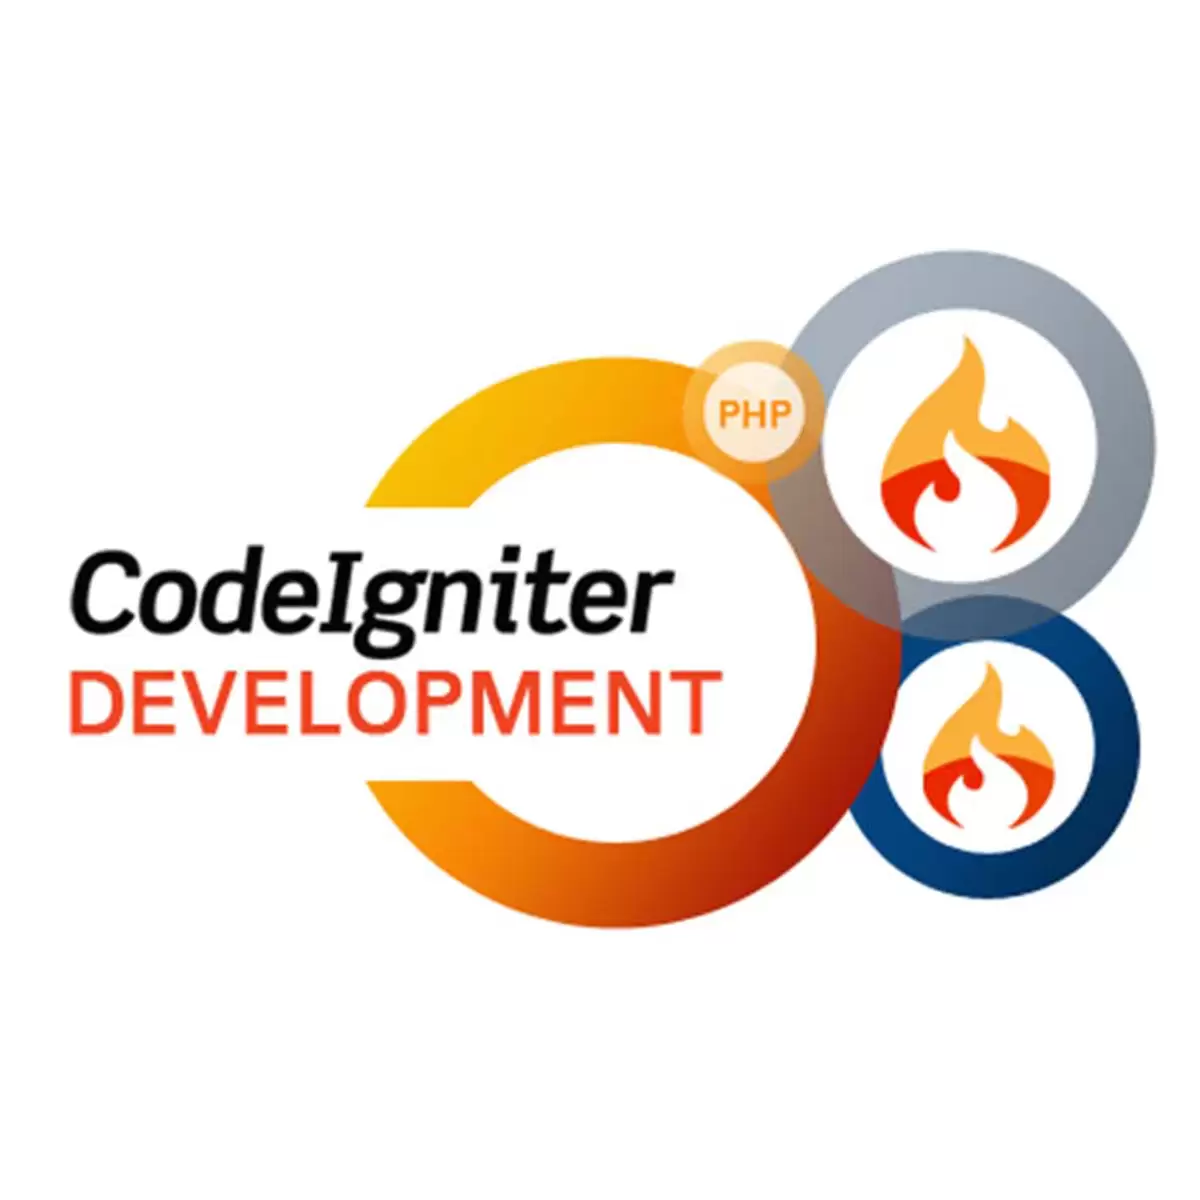 Codeigniter development services